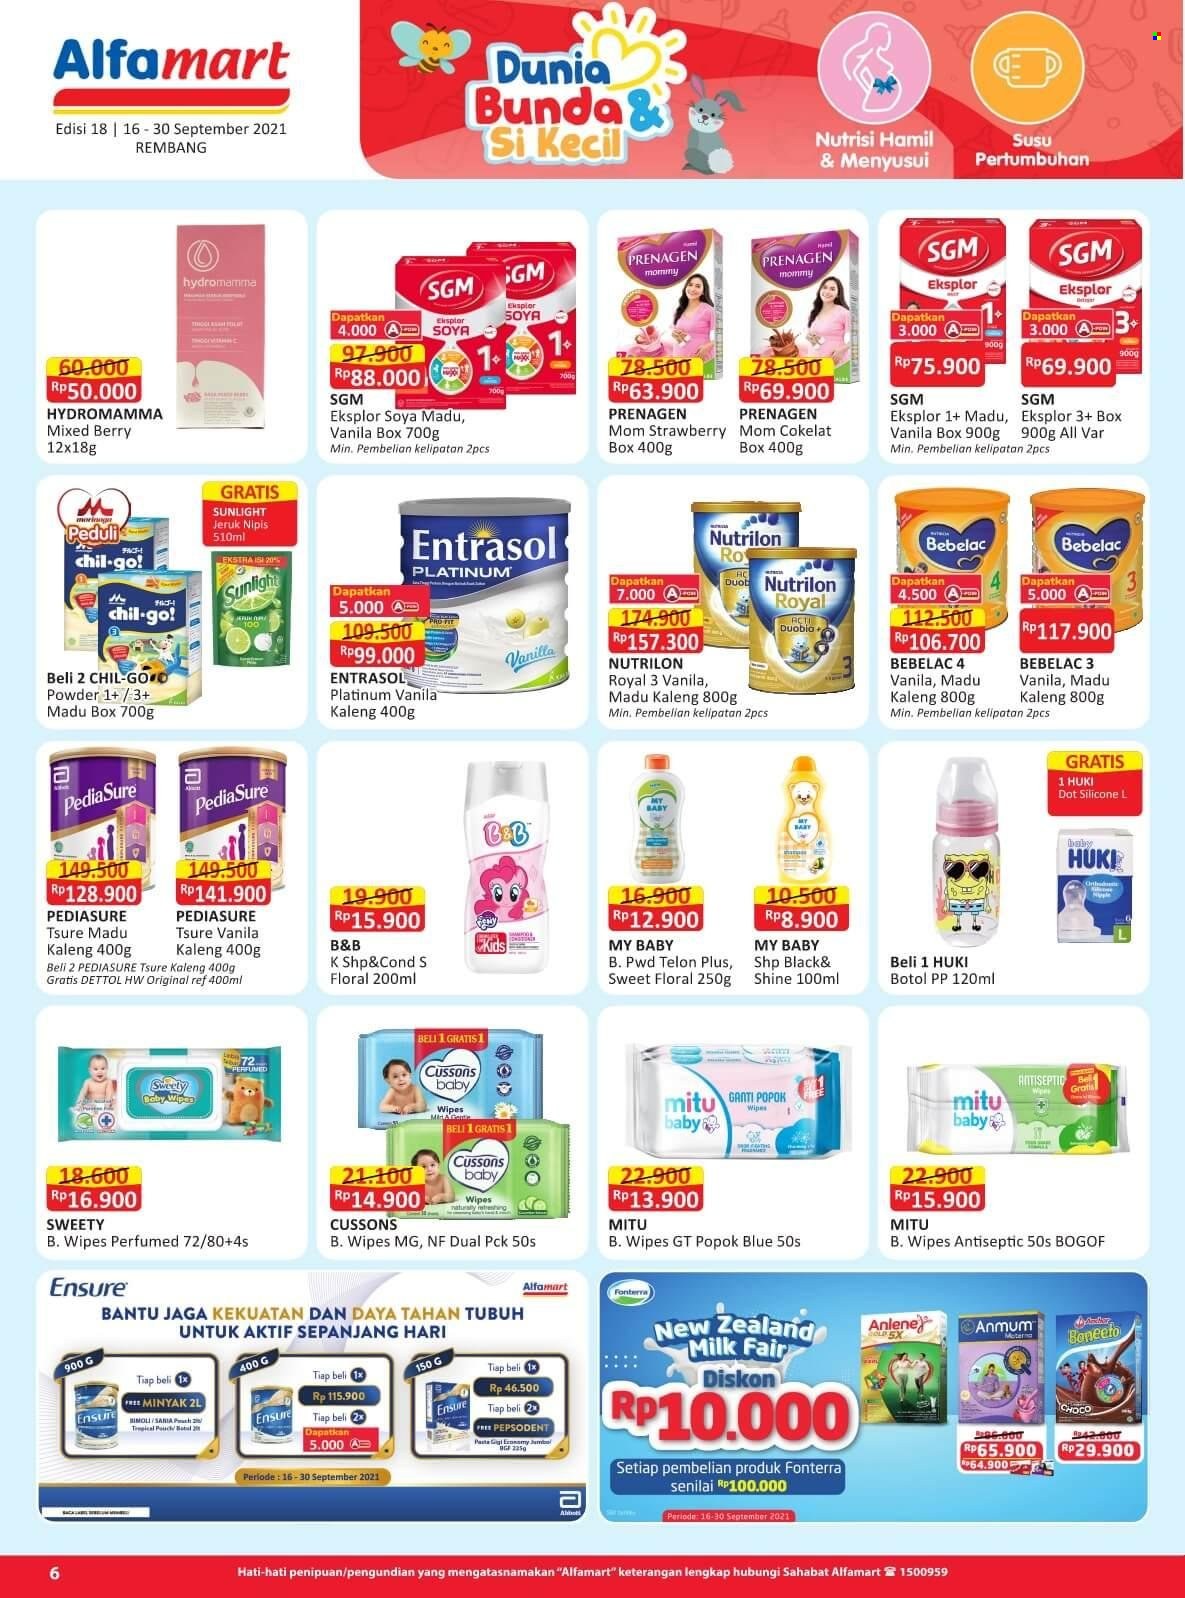 thumbnail - Promo Alfamart - 09/16/2021 - 09/30/2021 - Produk diskon - milk, wipes, sunlight, sweety, pepsodent, my baby, minyak, mitu, jeruk, jeruk nipis, gra, dettol, dot, cussons, box. Halaman 6.